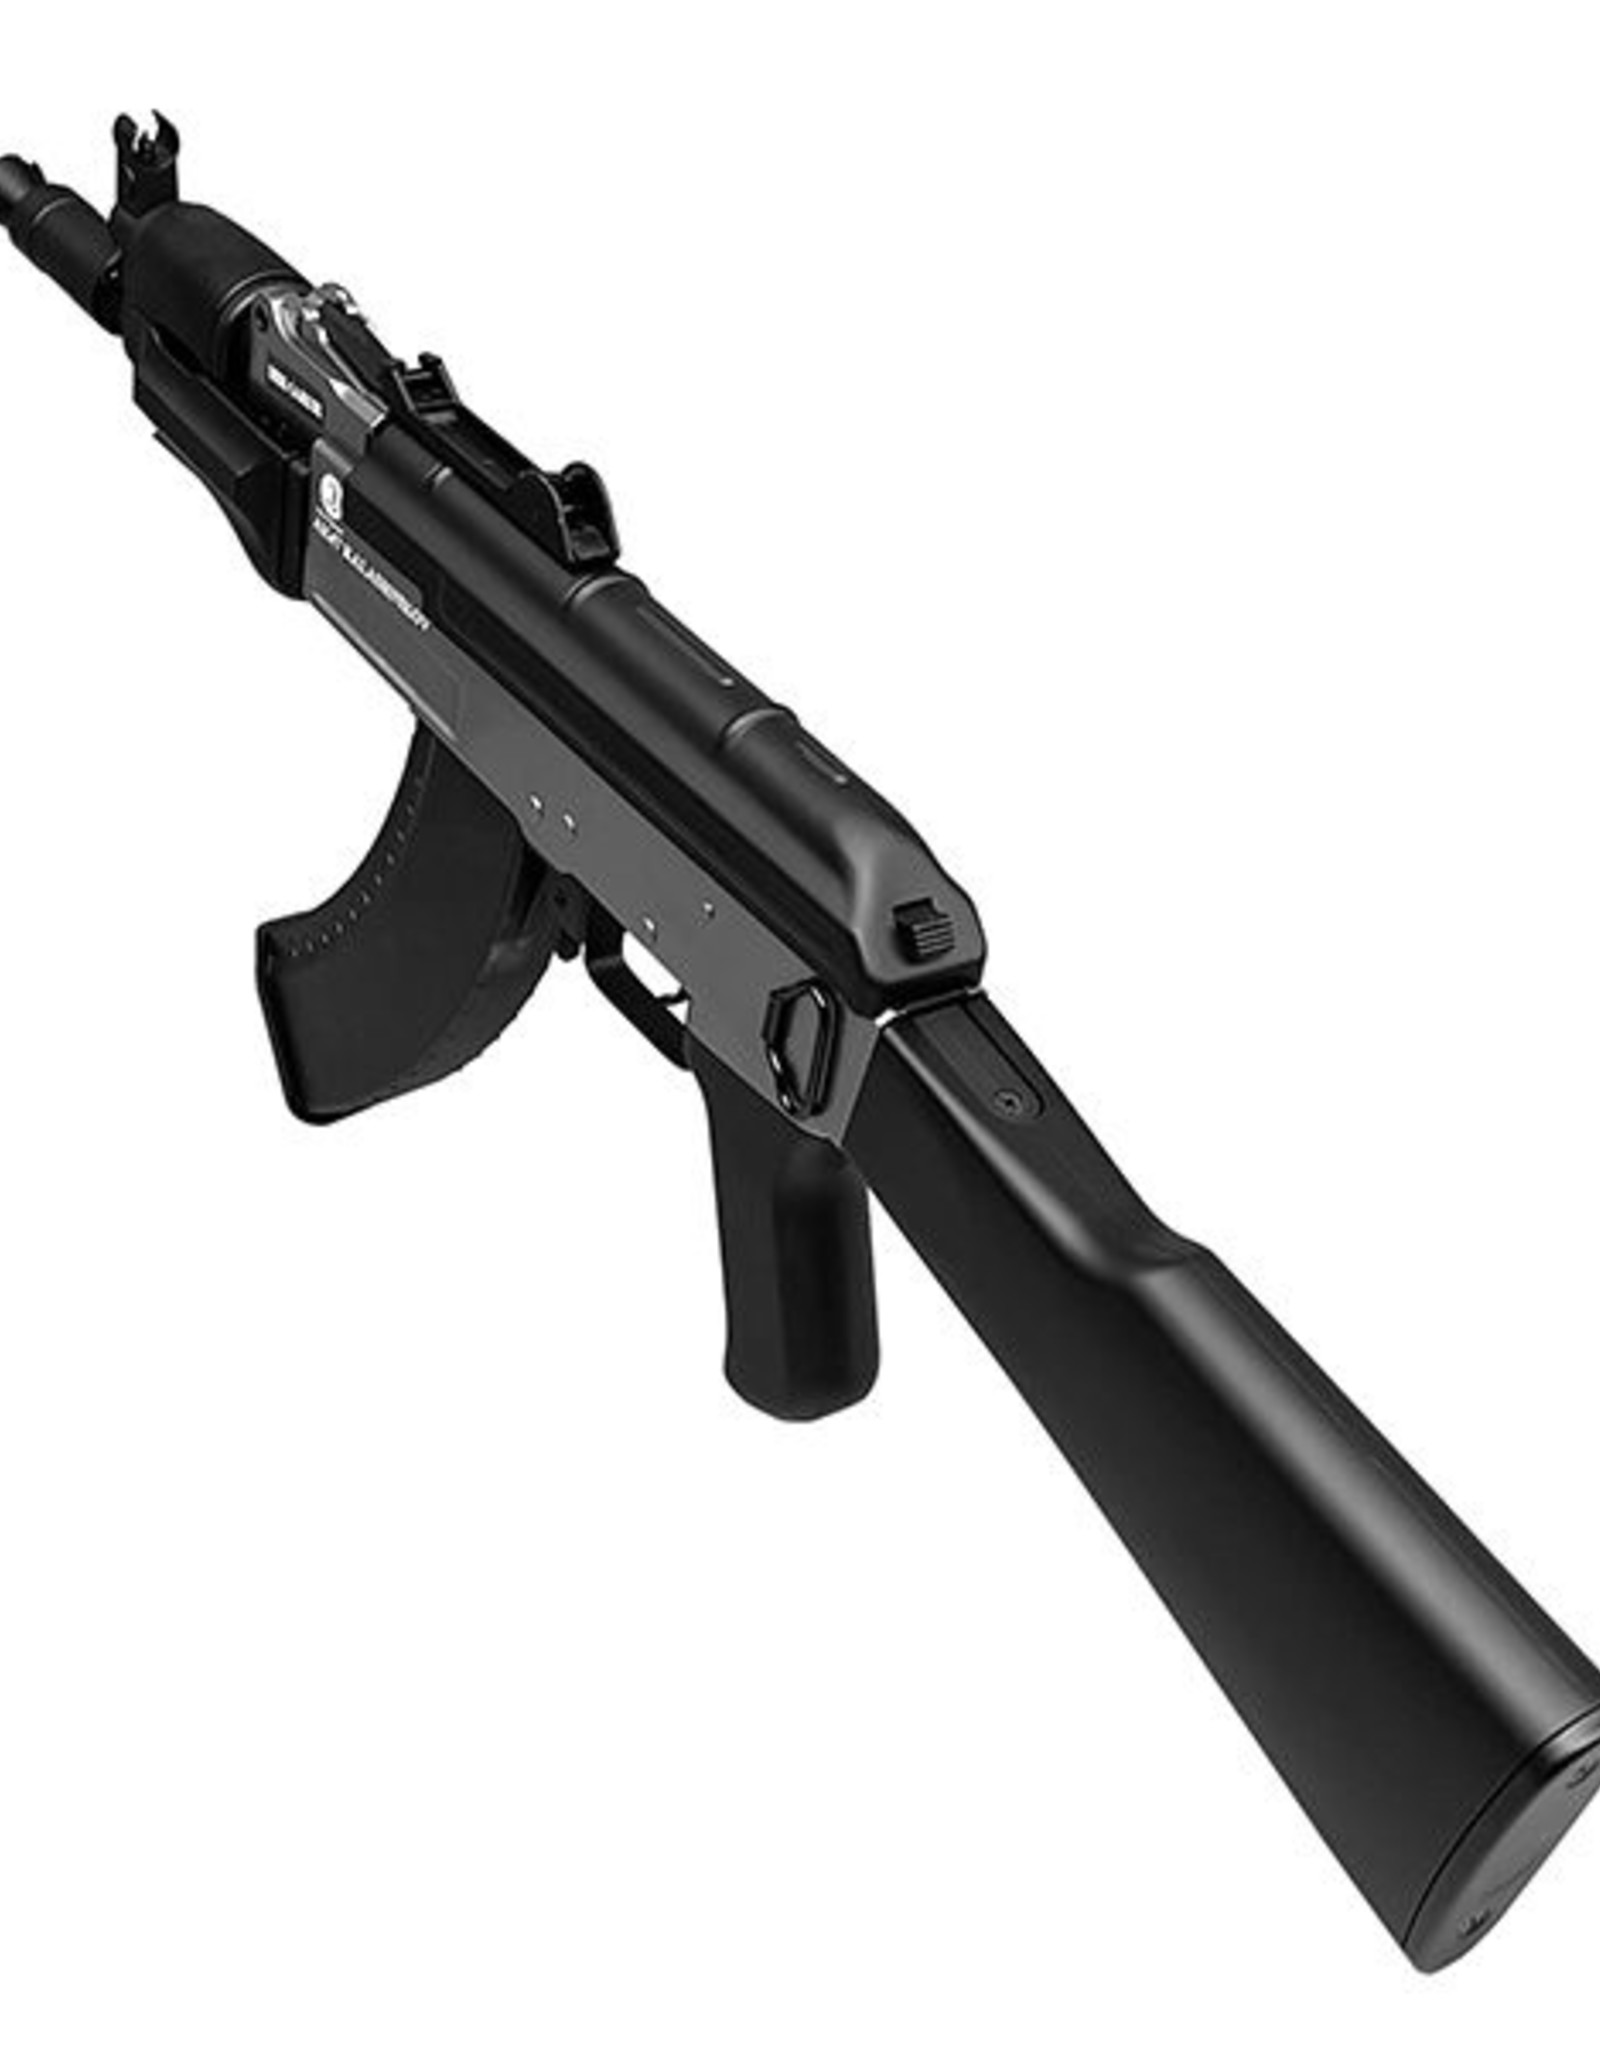 CYBERGUN Kalashnikov Beta Spetsnaz AK AEG (With Bat. and Charger, 1 Kilo 0.25g BB Pellets and Rifle Bag